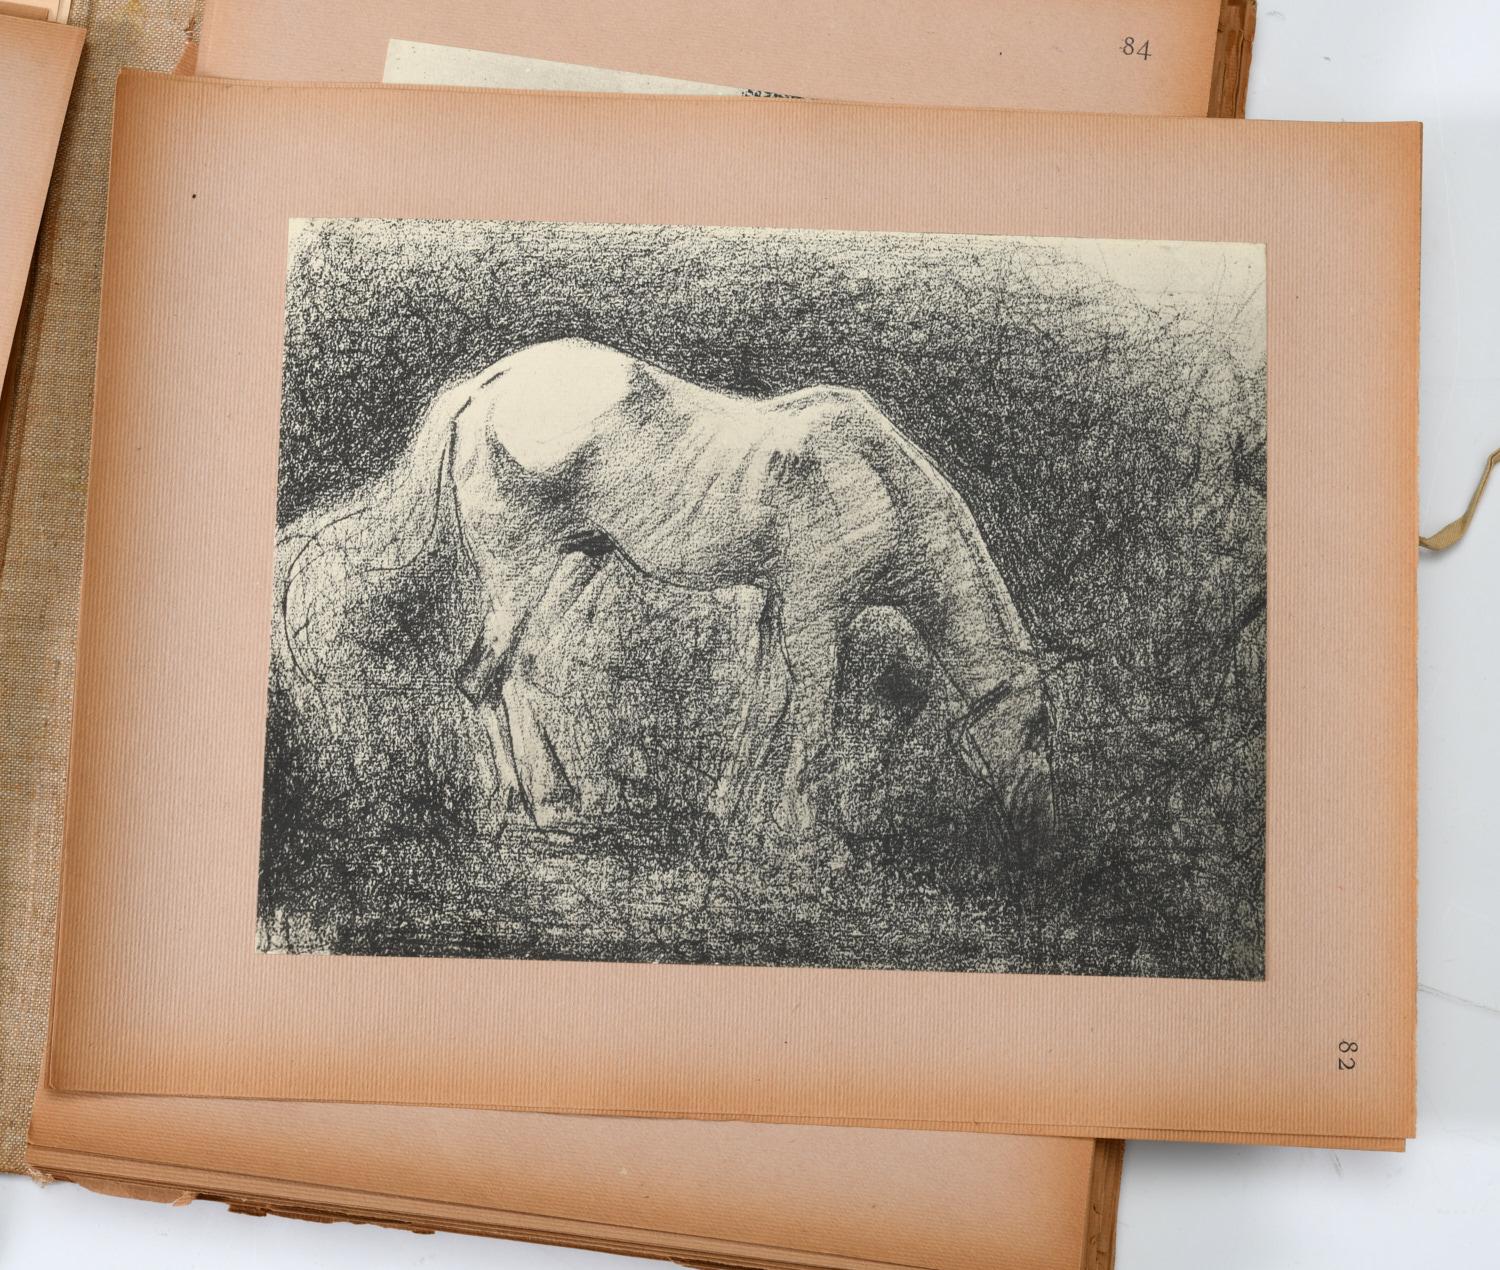 19th Century Les Dessins De Georges Seurat, 1859-1891, Complete Folio of 67 Images